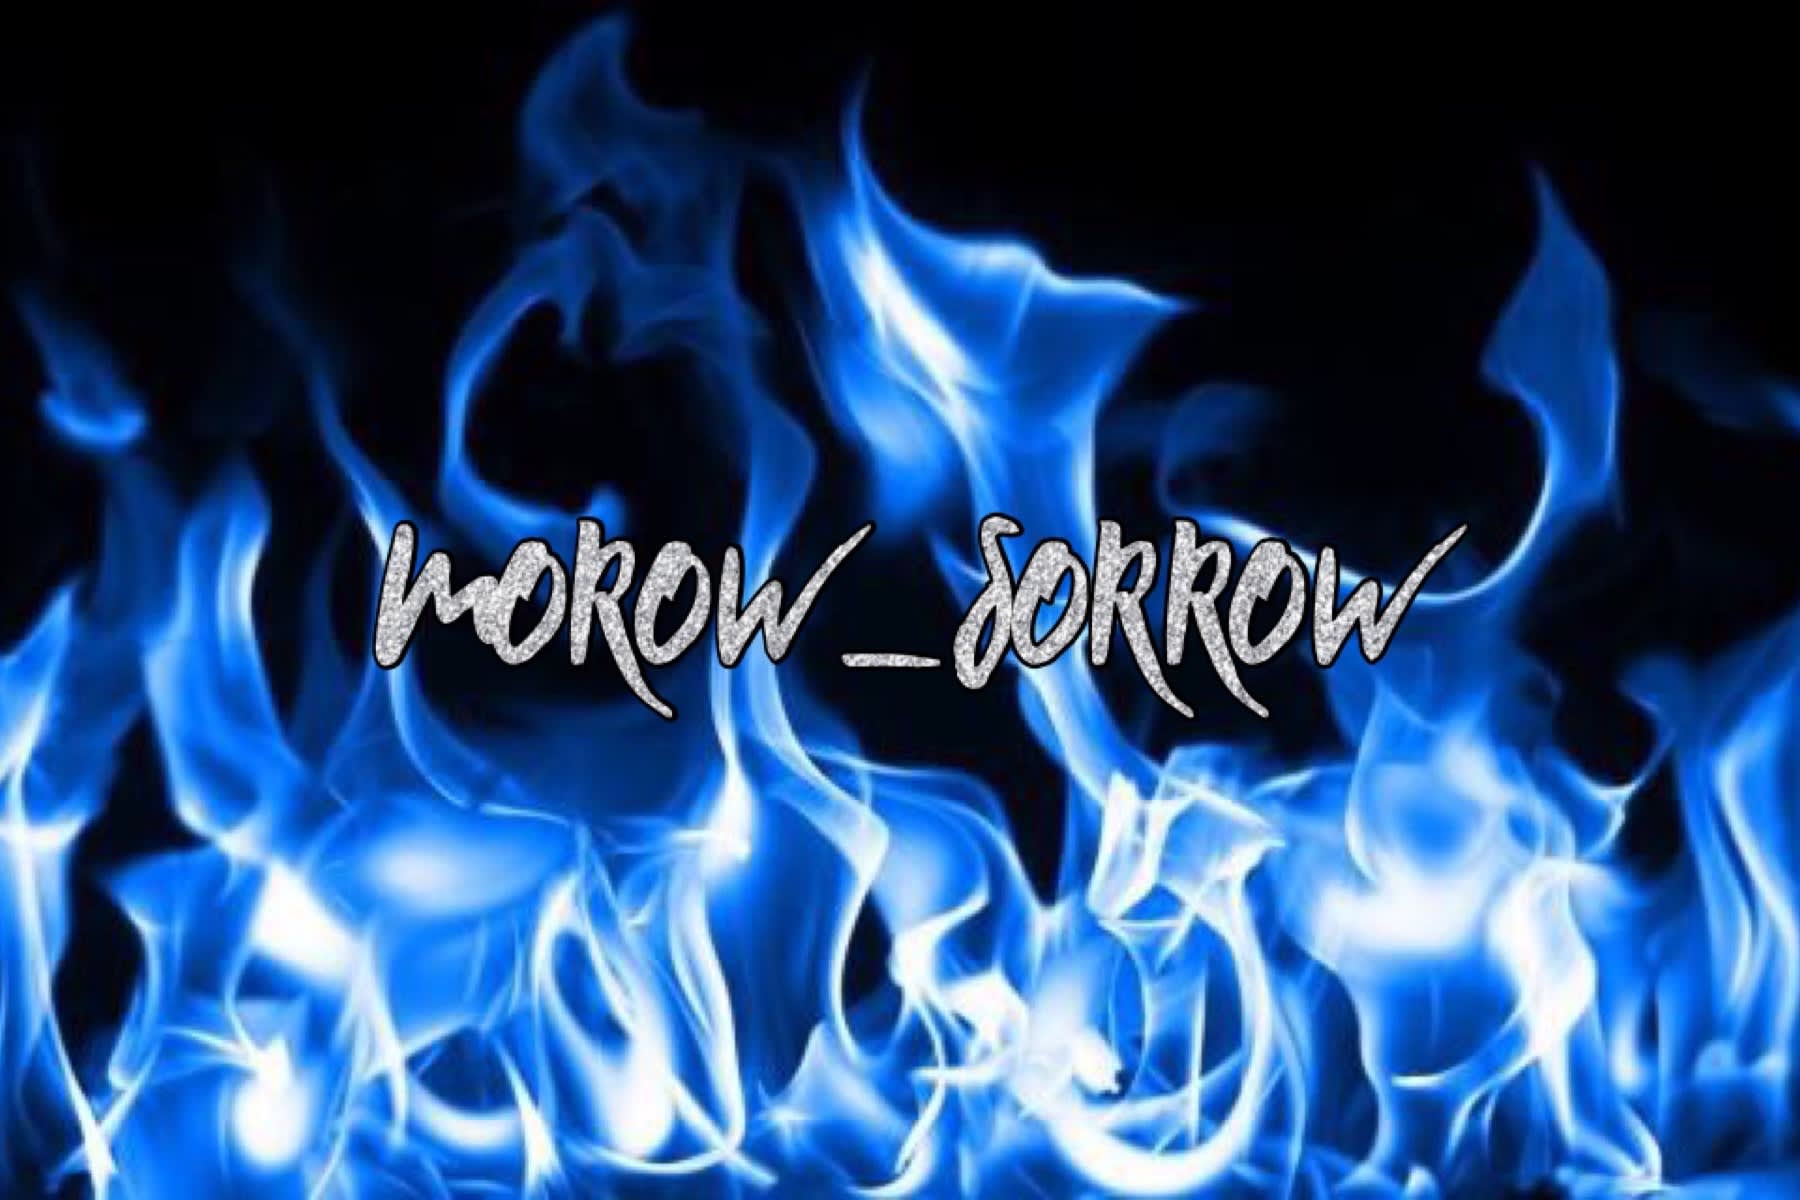 Morow Sorrow